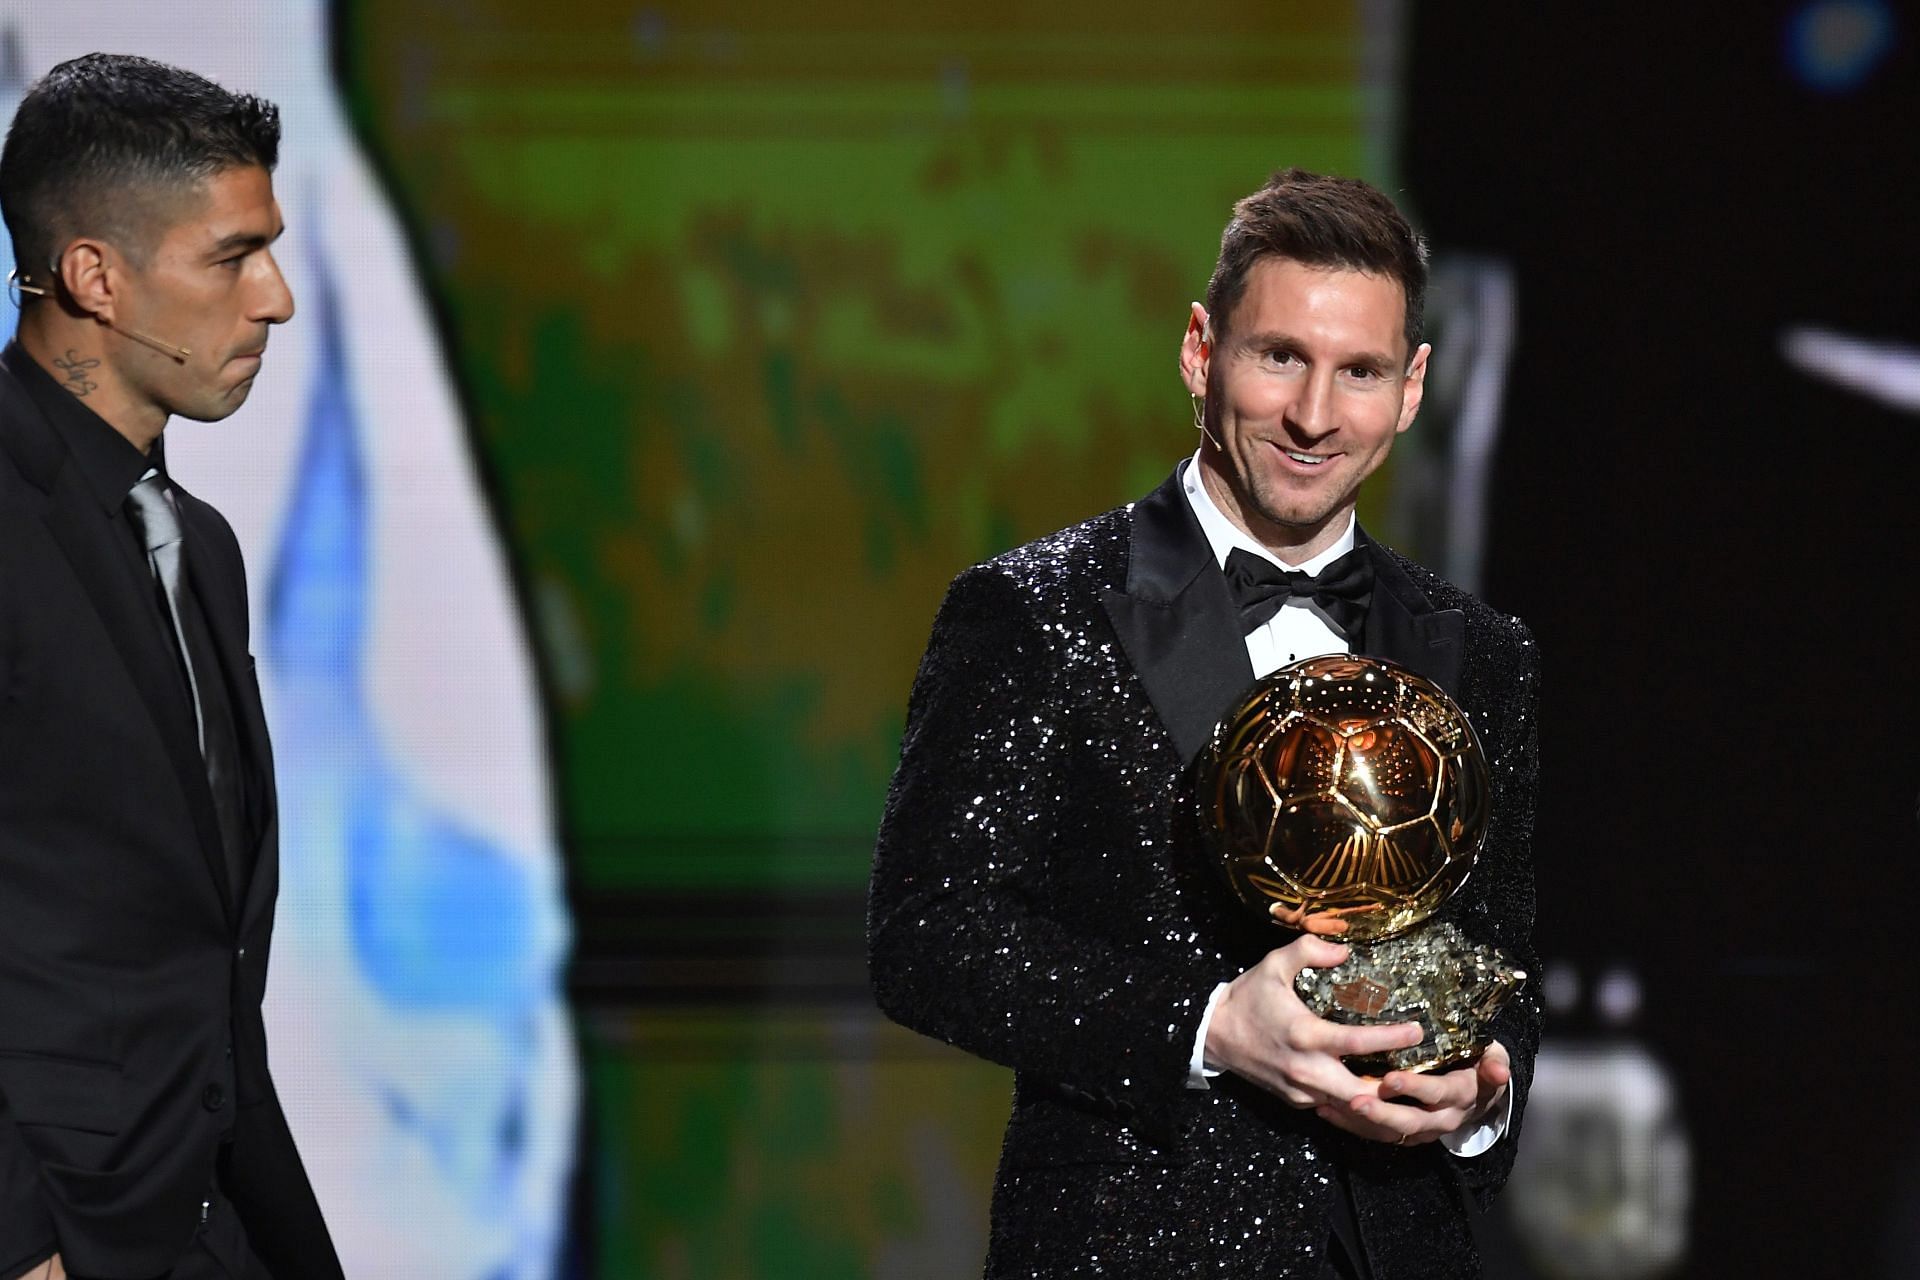 Luis Suarez and Lionel Messi (via Getty Images)